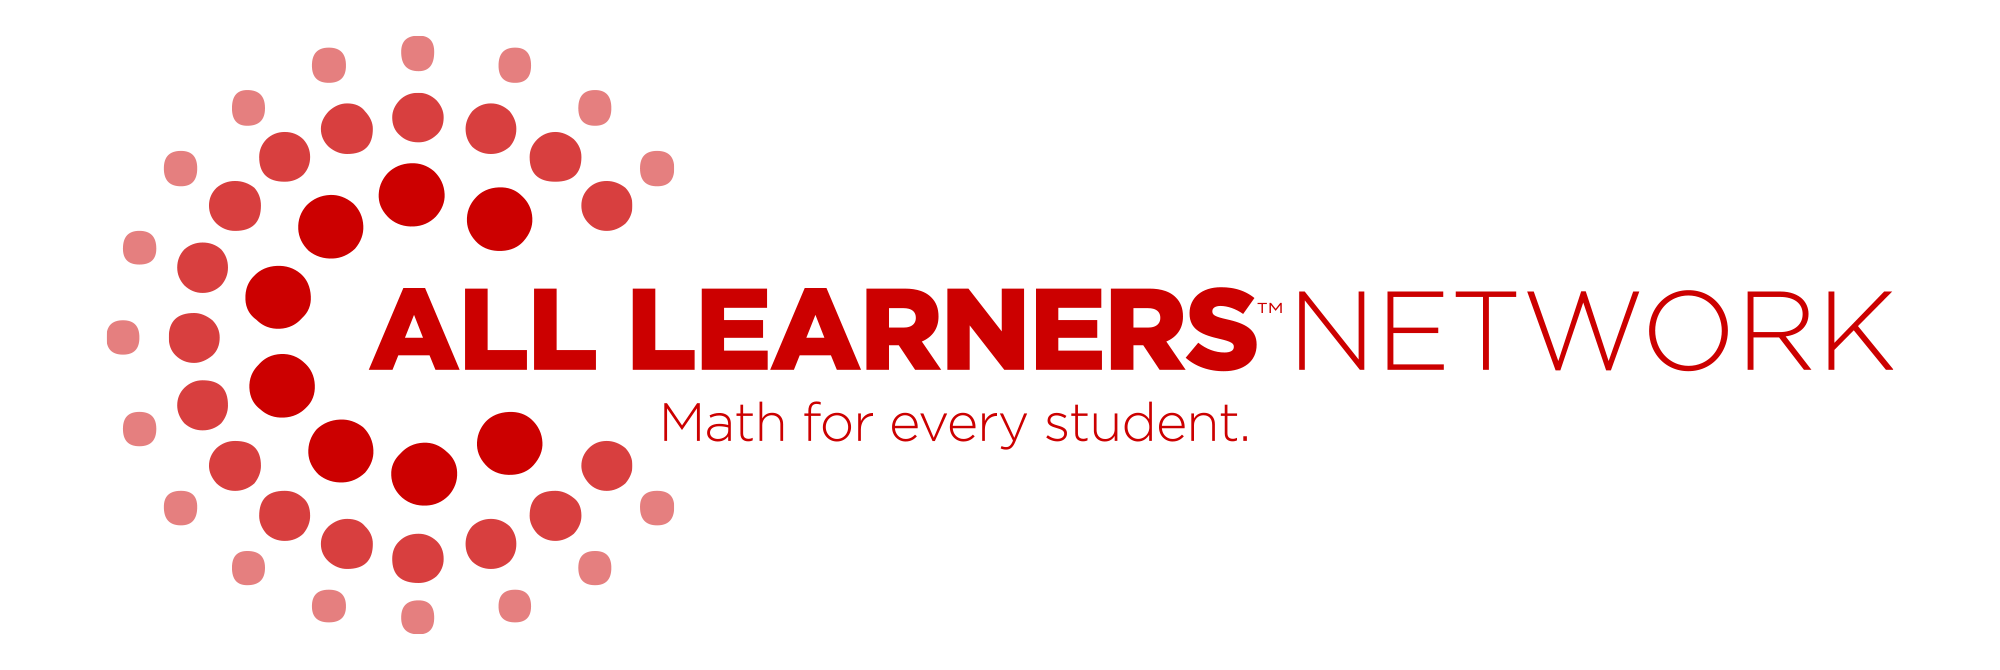 All Learners Network logo